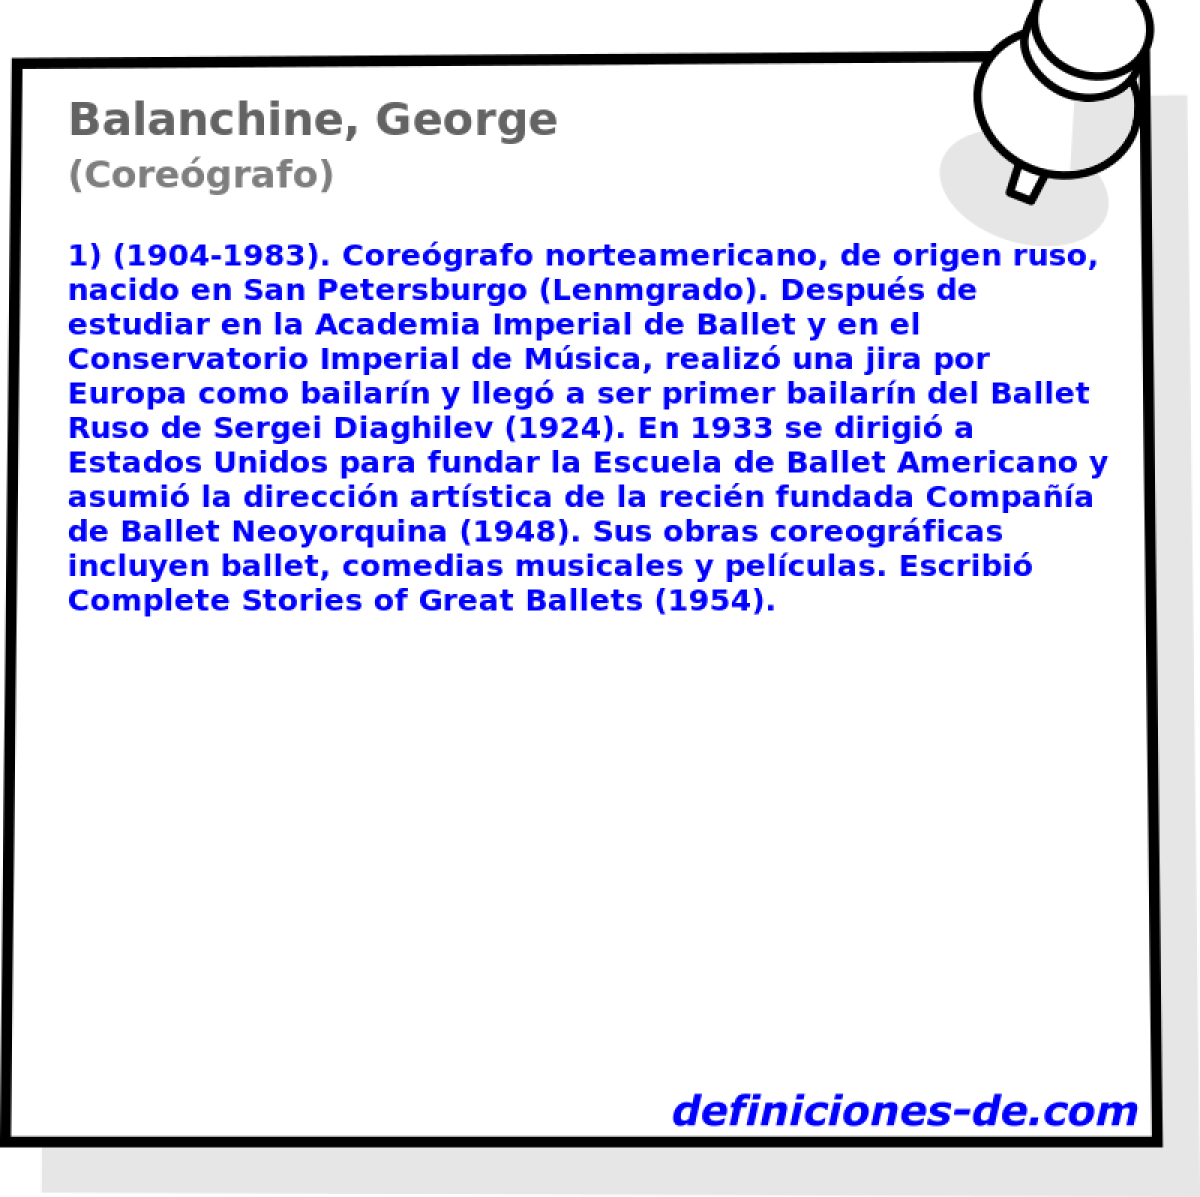 Balanchine, George (Coregrafo)